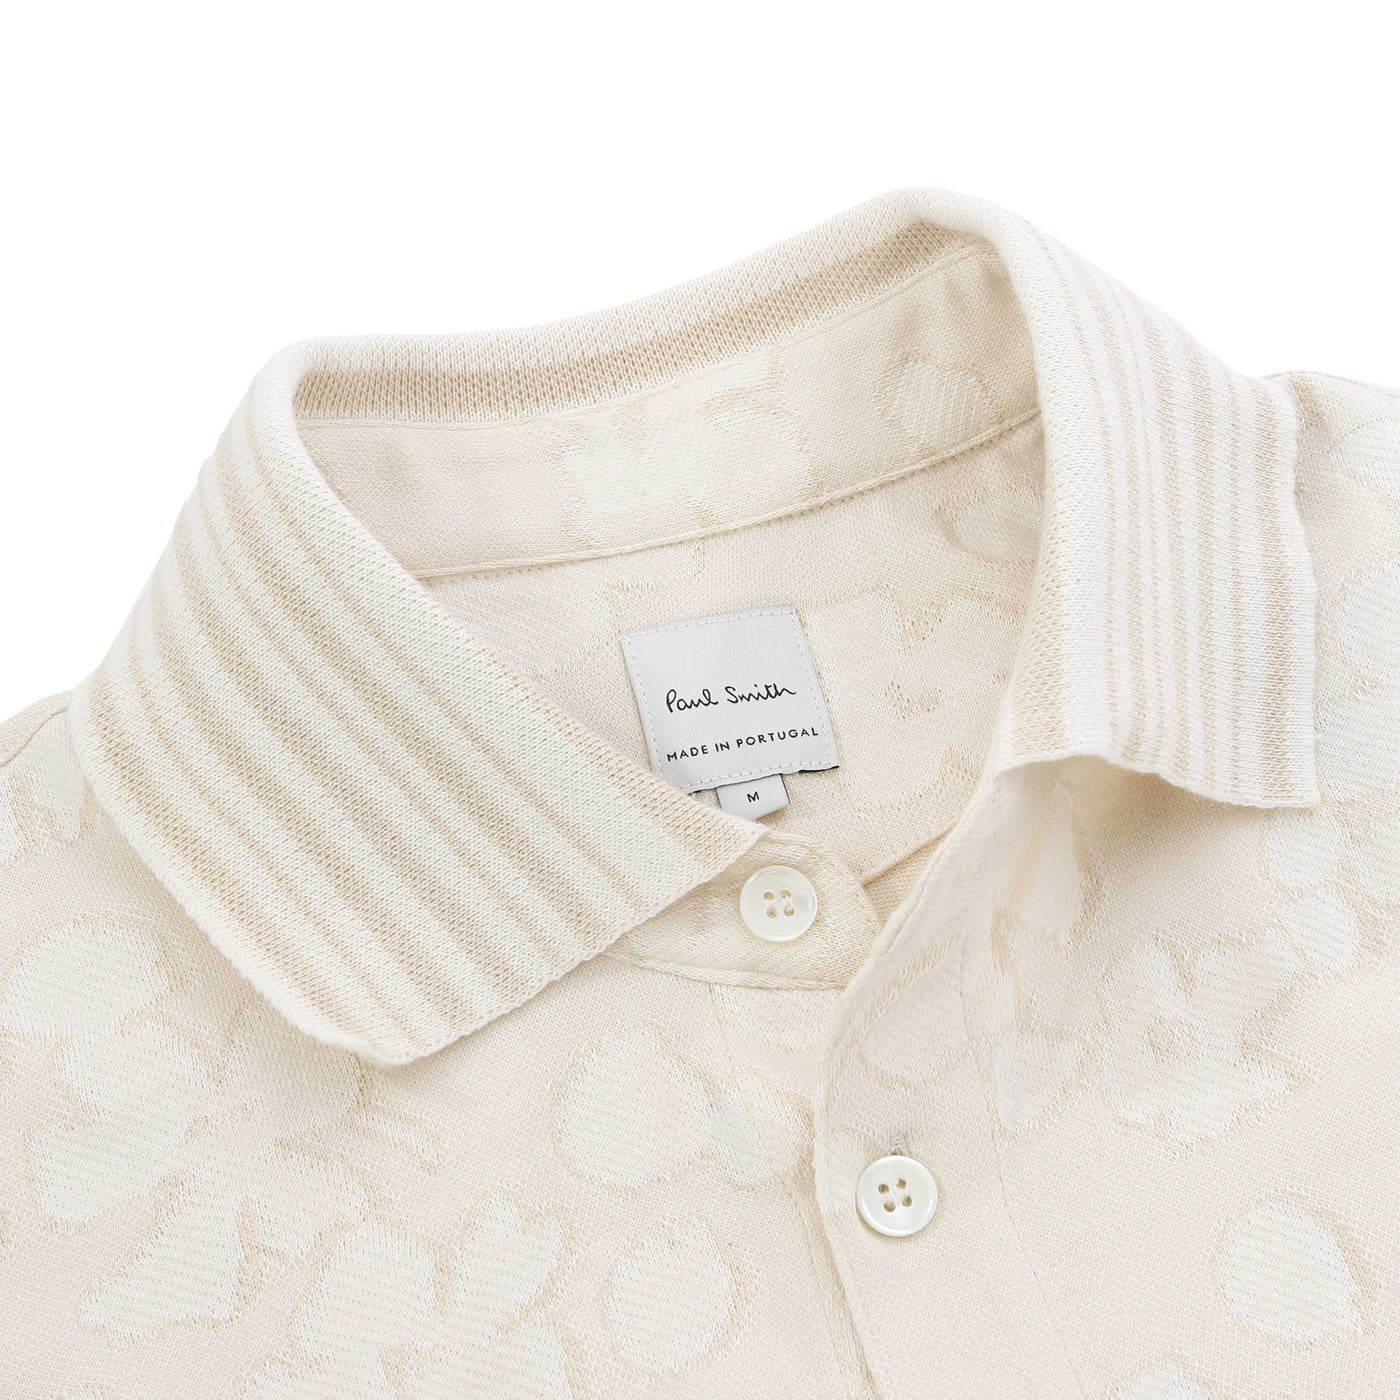 Paul Smith Floral Jacquard Polo Shirt in Cream Collar